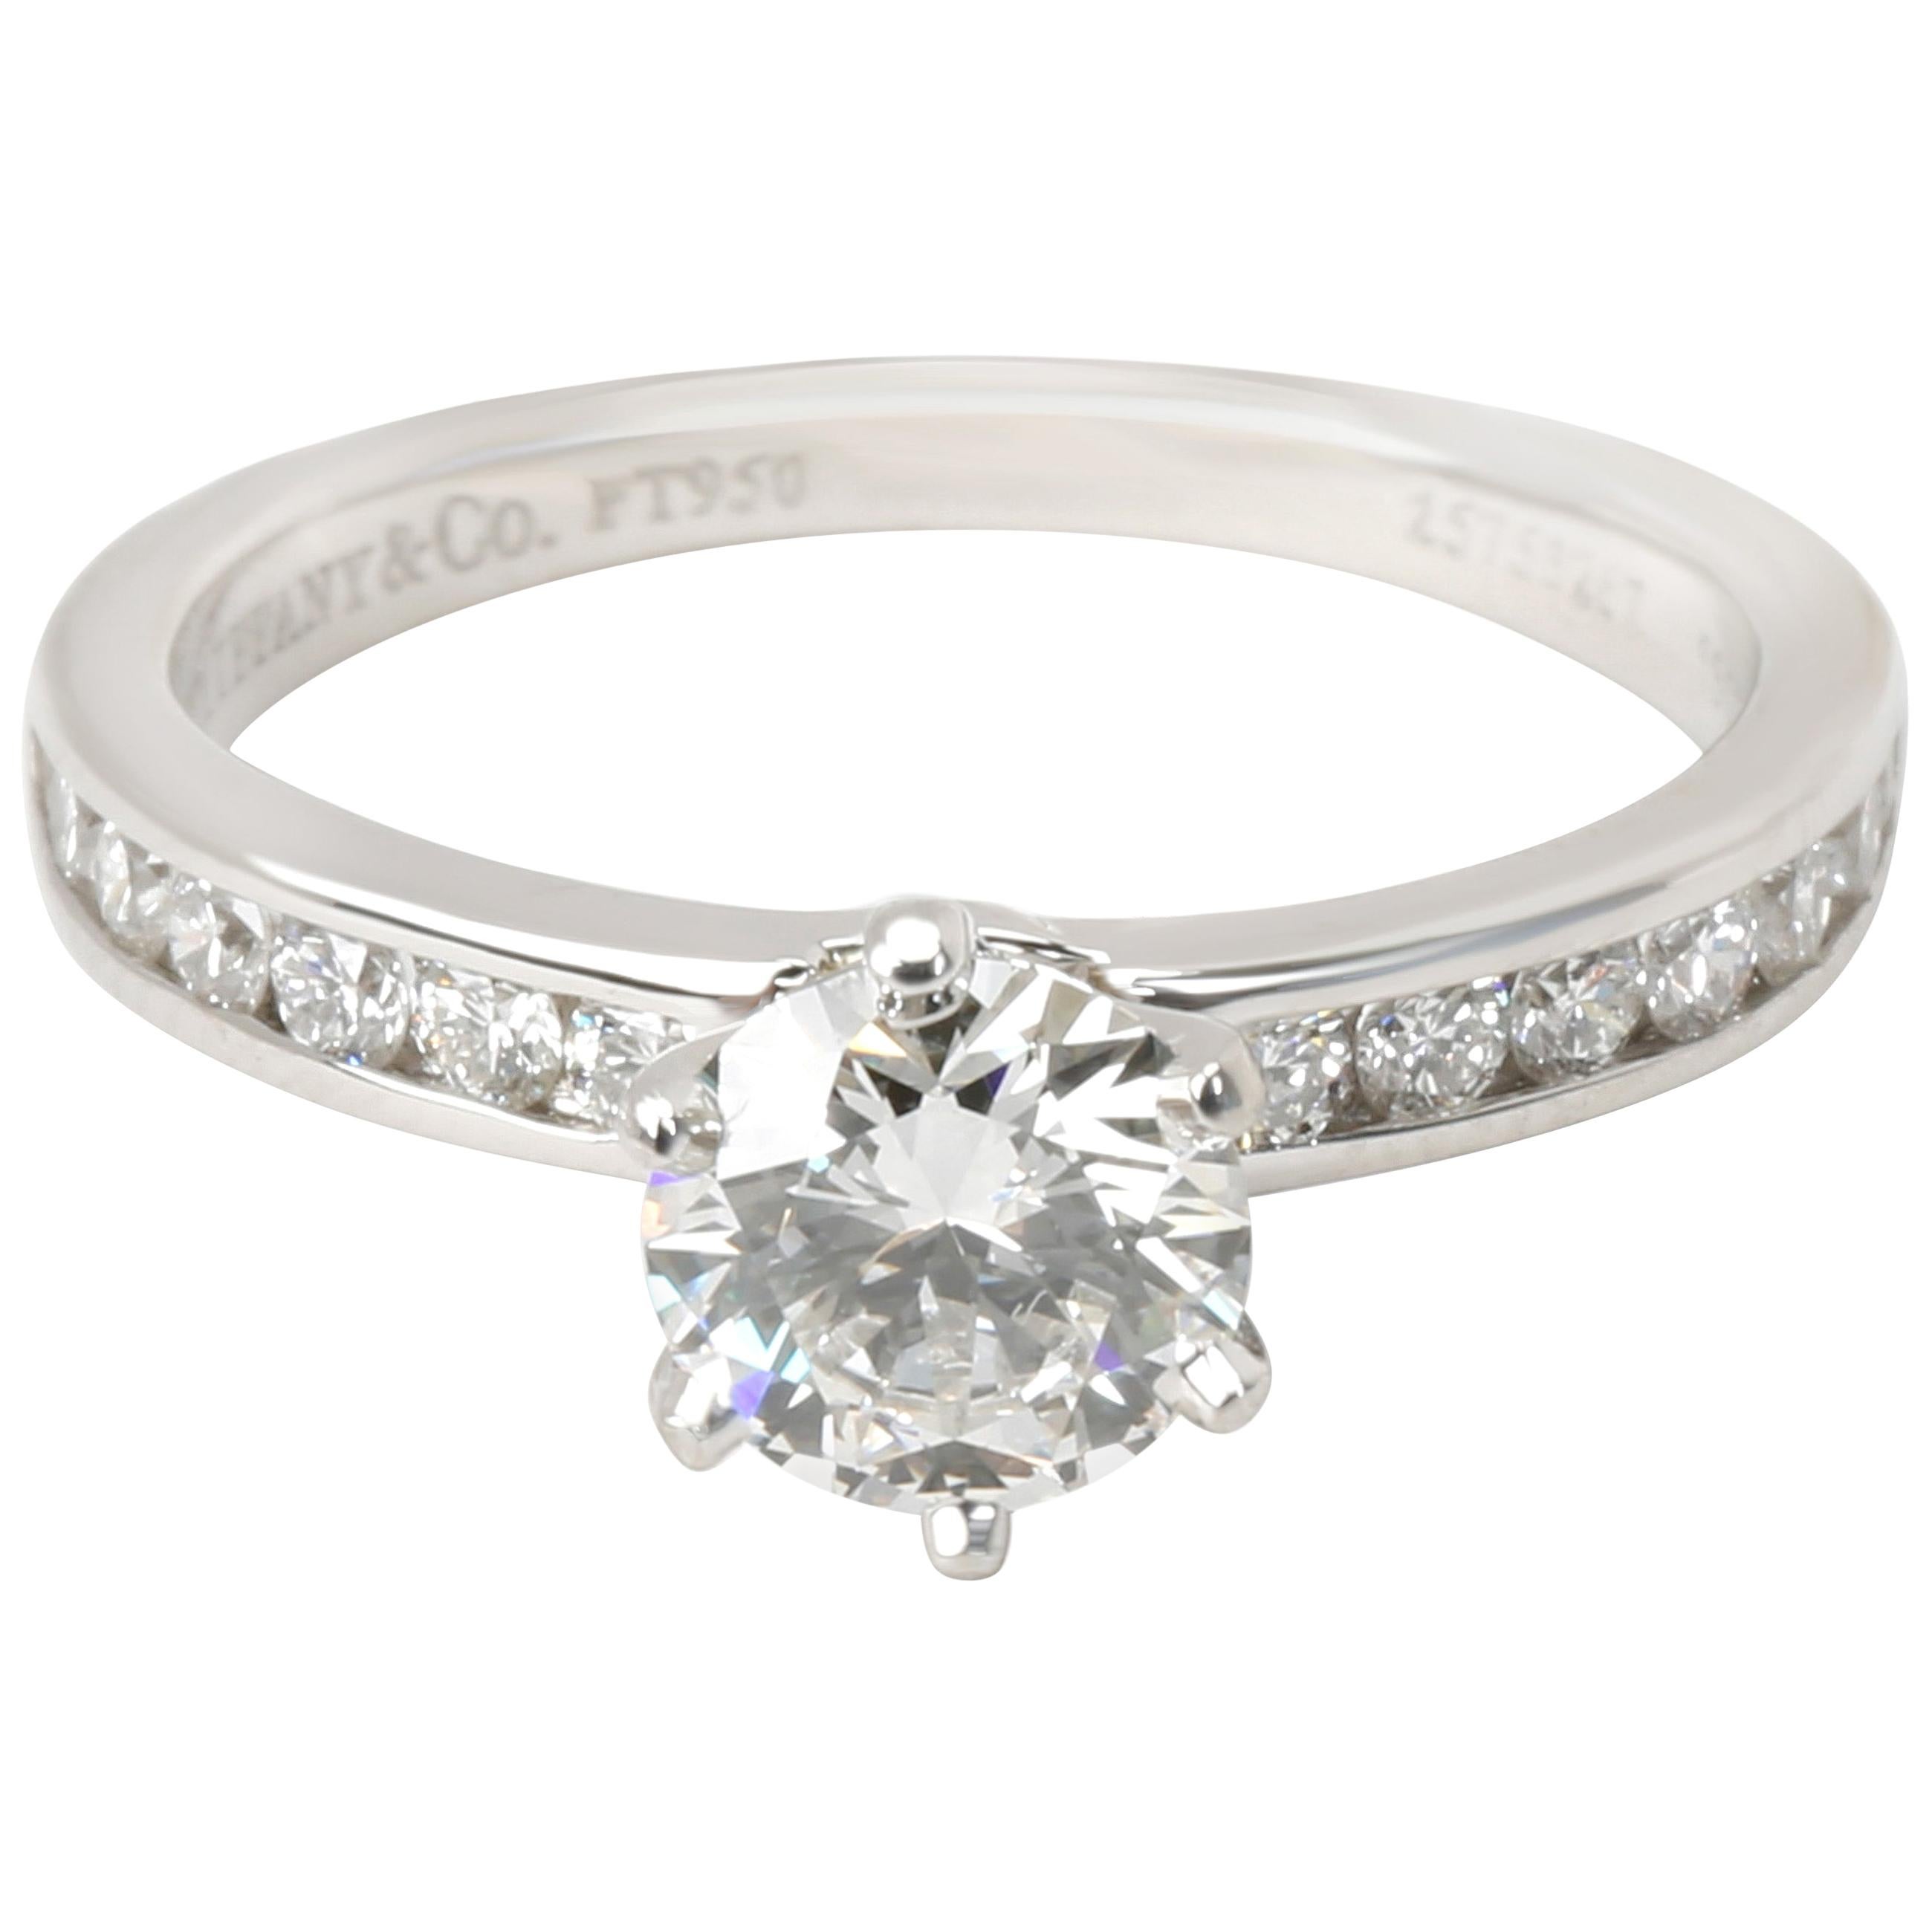 Tiffany & Co. Channel Diamond Engagement Ring in Platinum F VVS2 0.78 Carat